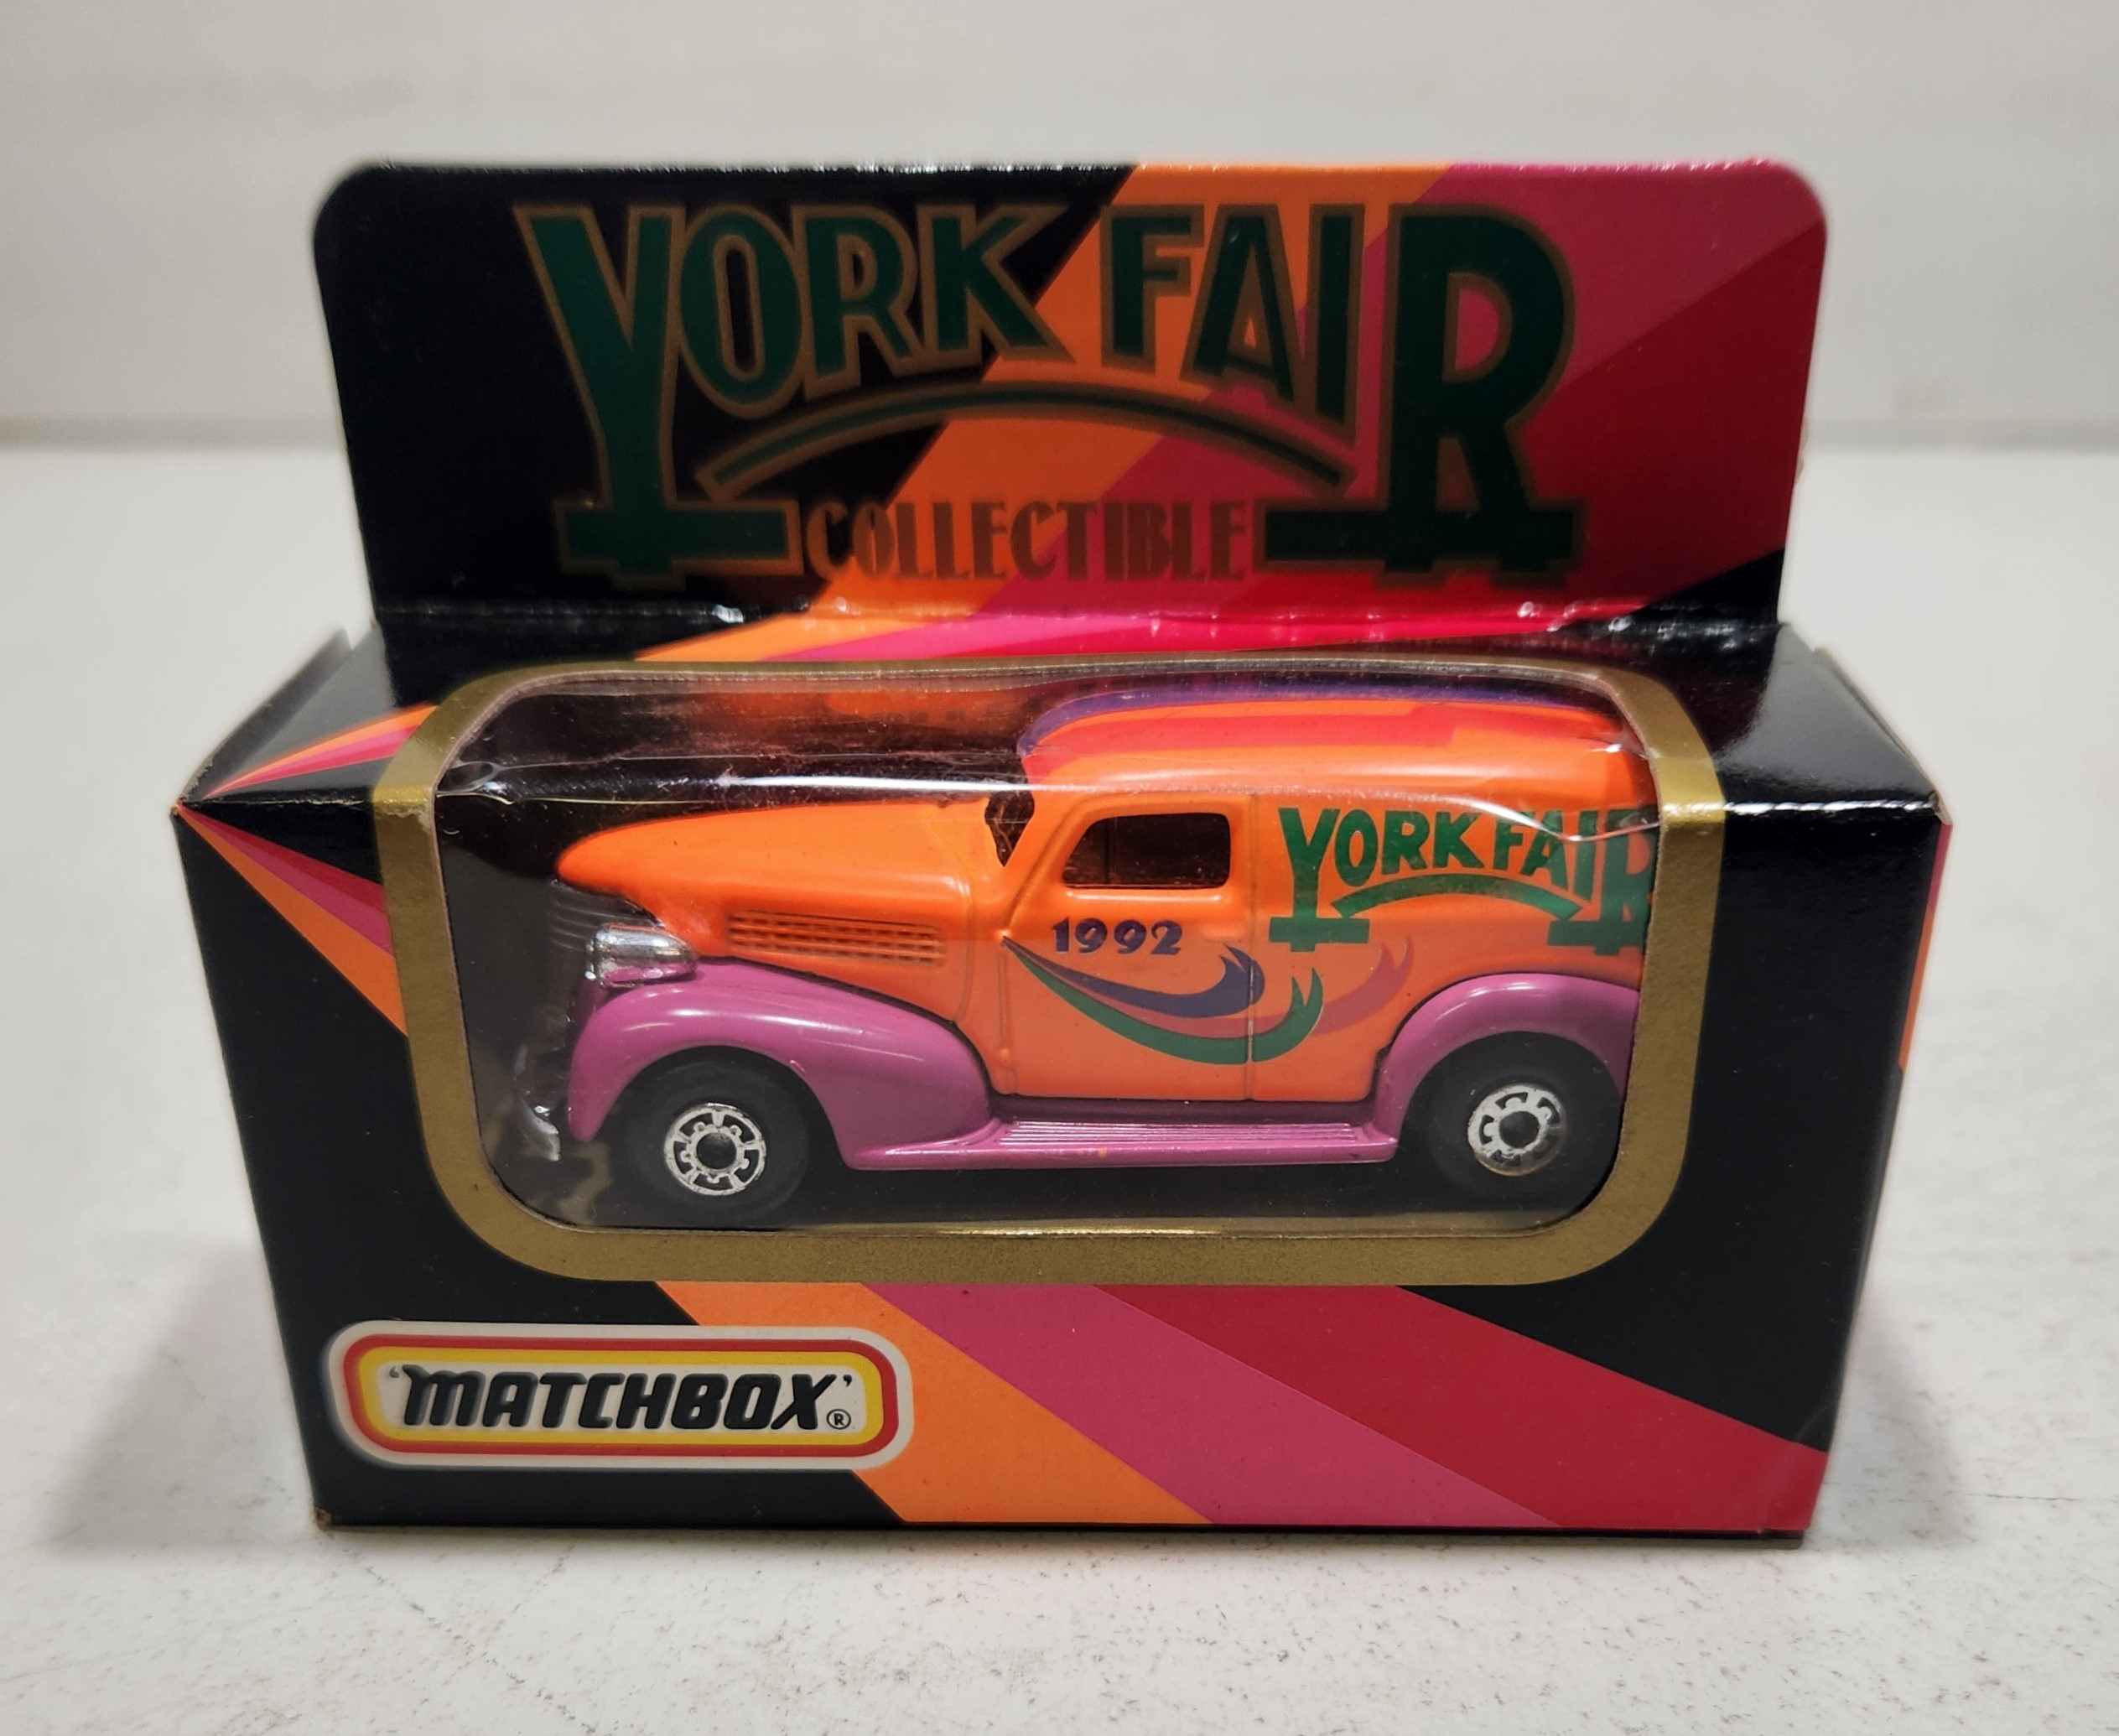 1992 York Fair 1/55th Panel Truck